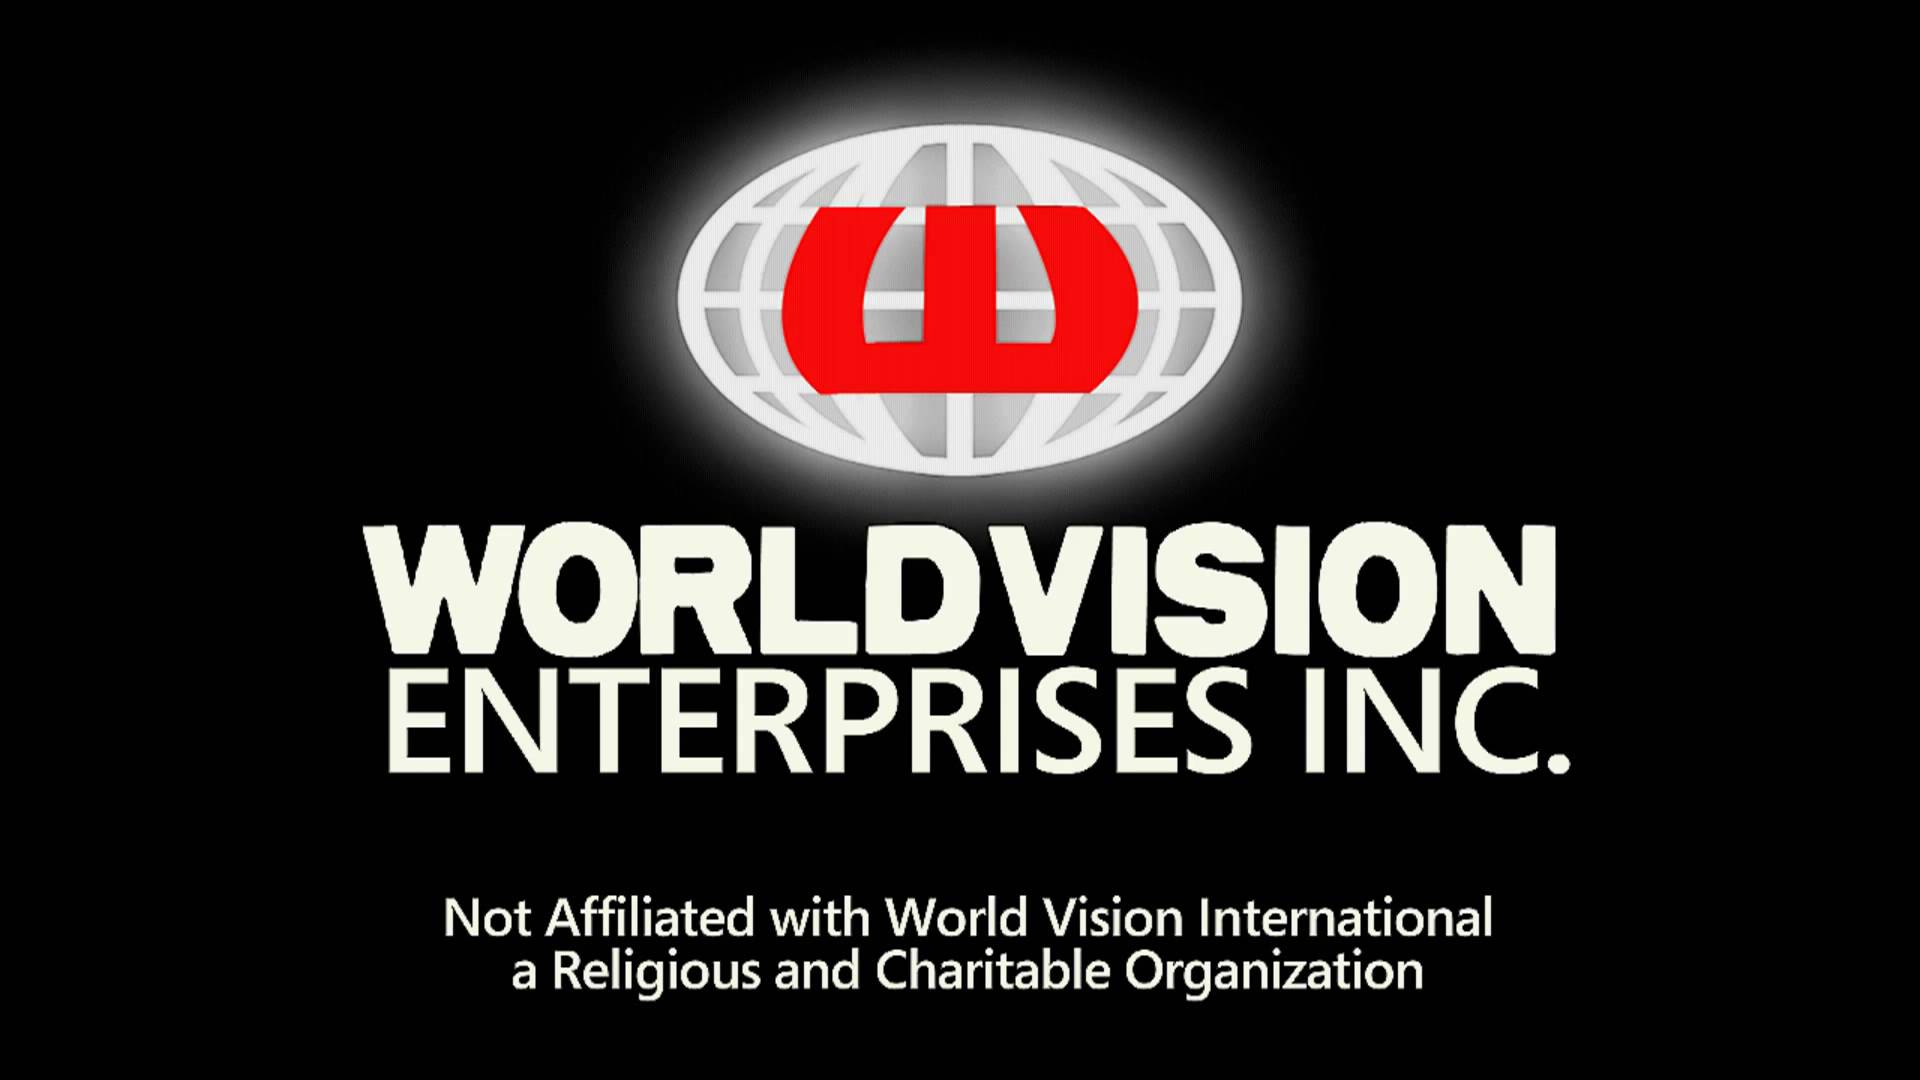 Worldvision Enterprises Blockbuster Logo - Worldvision enterprises Logos